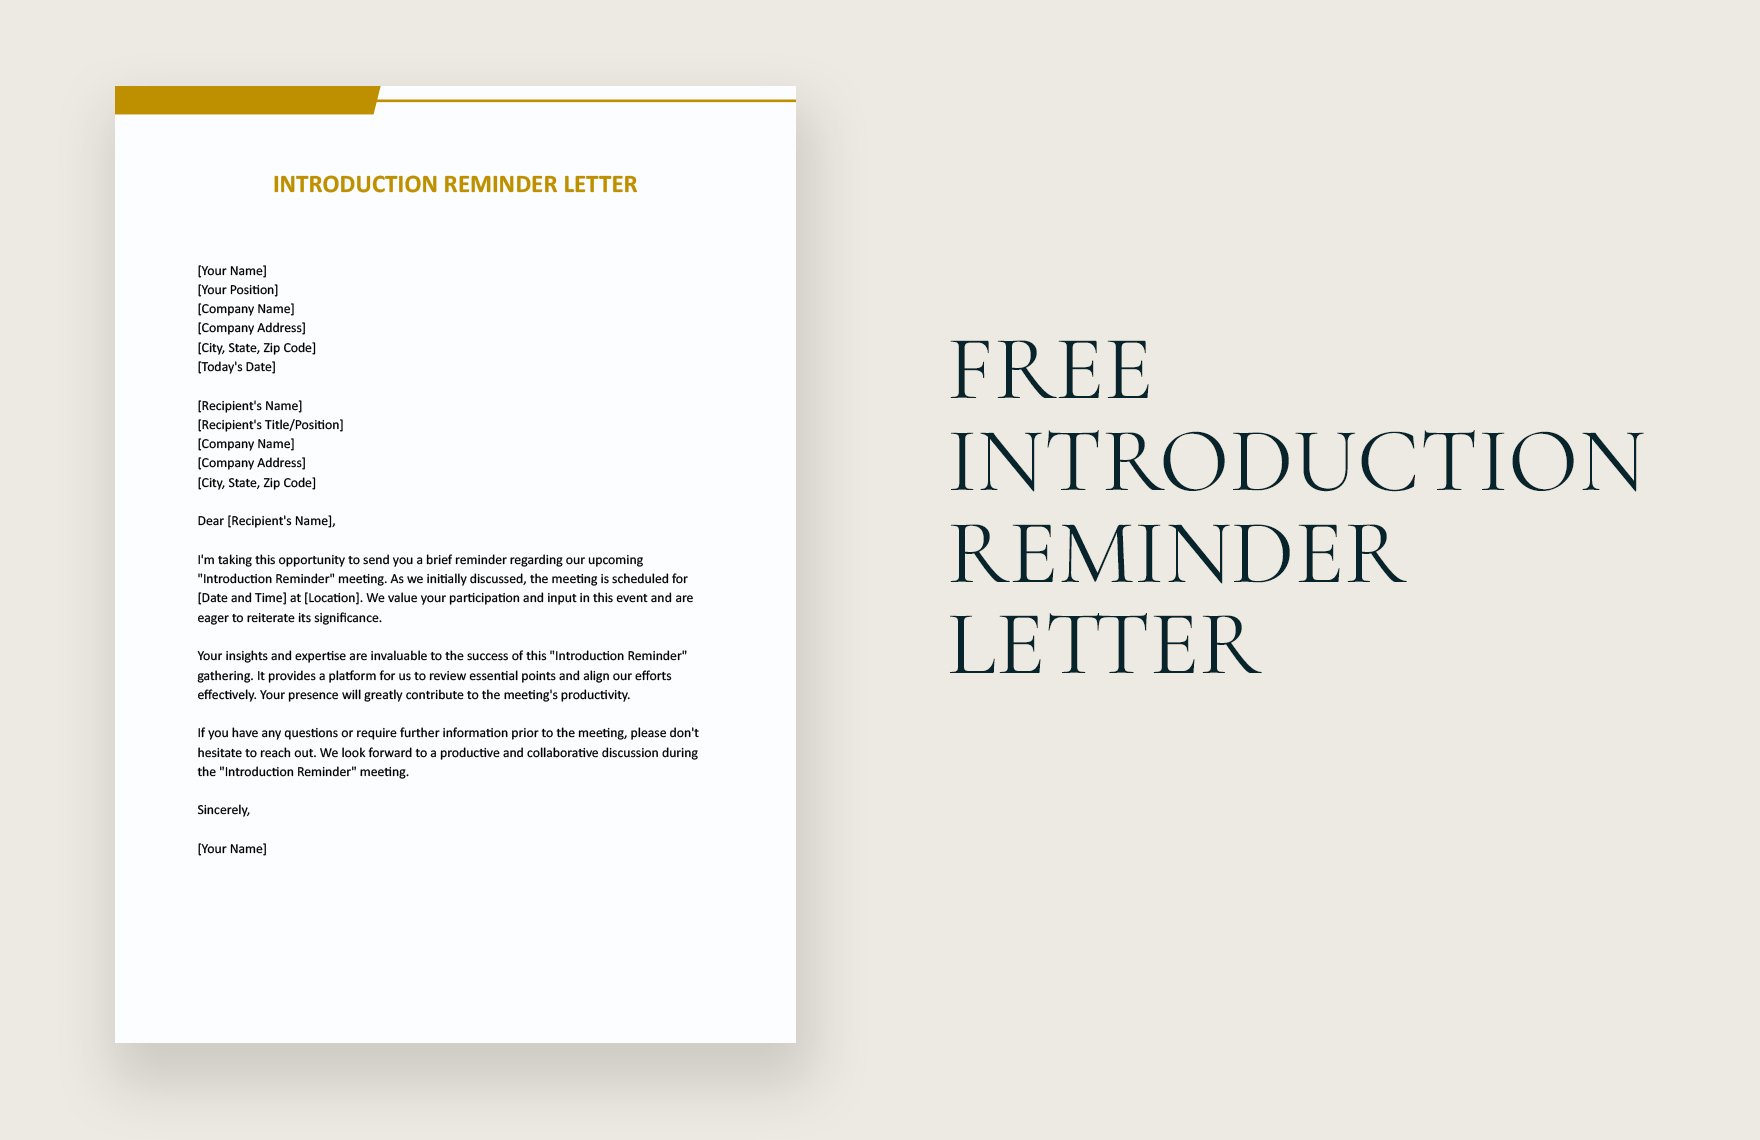 Free Introduction Reminder Letter